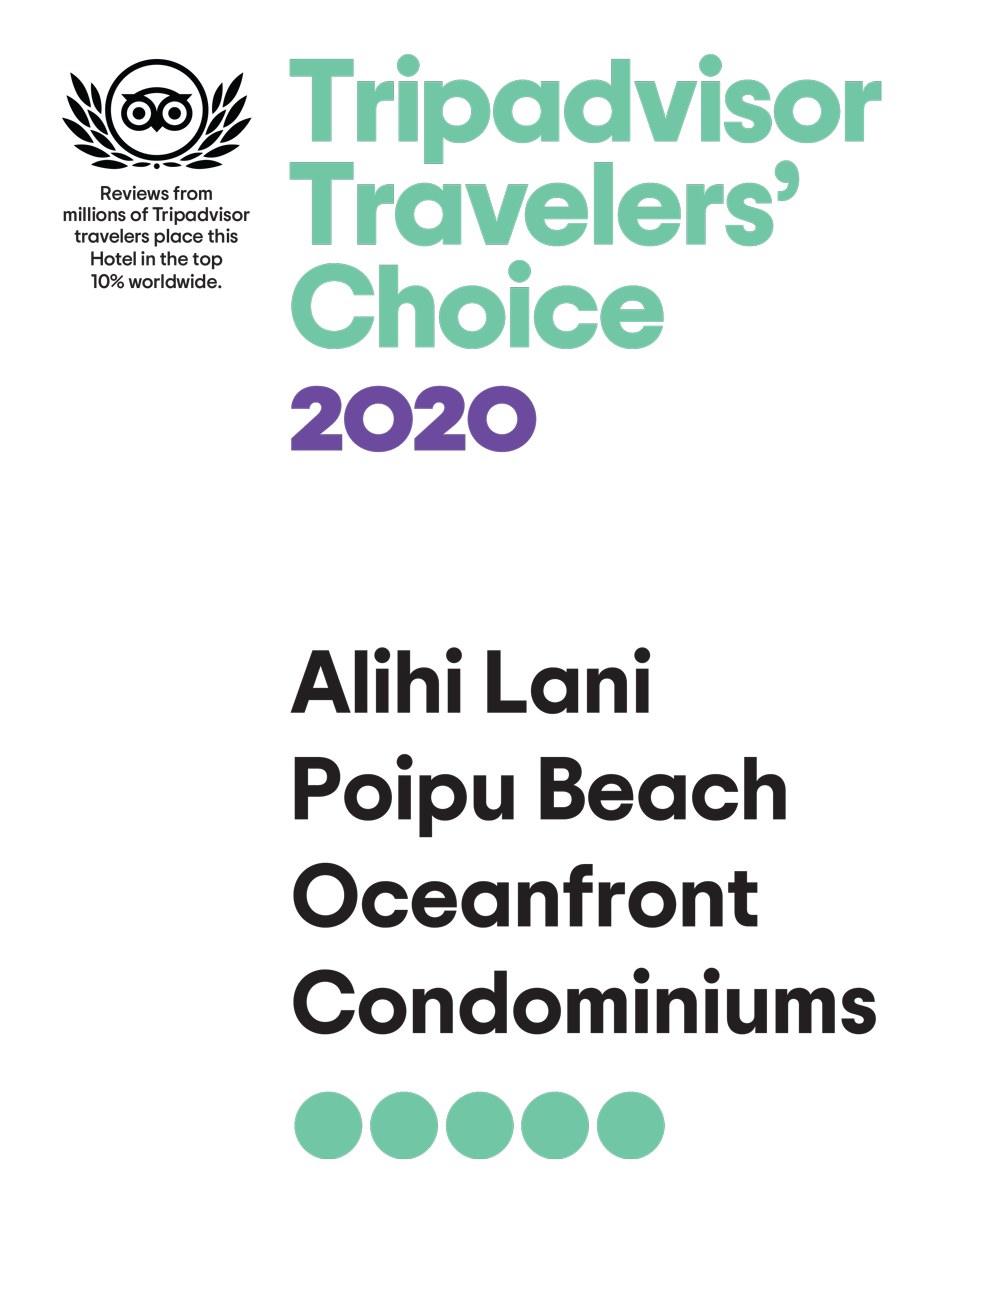 2020 Tripadviser Travelers' Choice Award to Alihi Lani Poipu Beach Oceanfront Condominiums placing it in top 10% worldwide